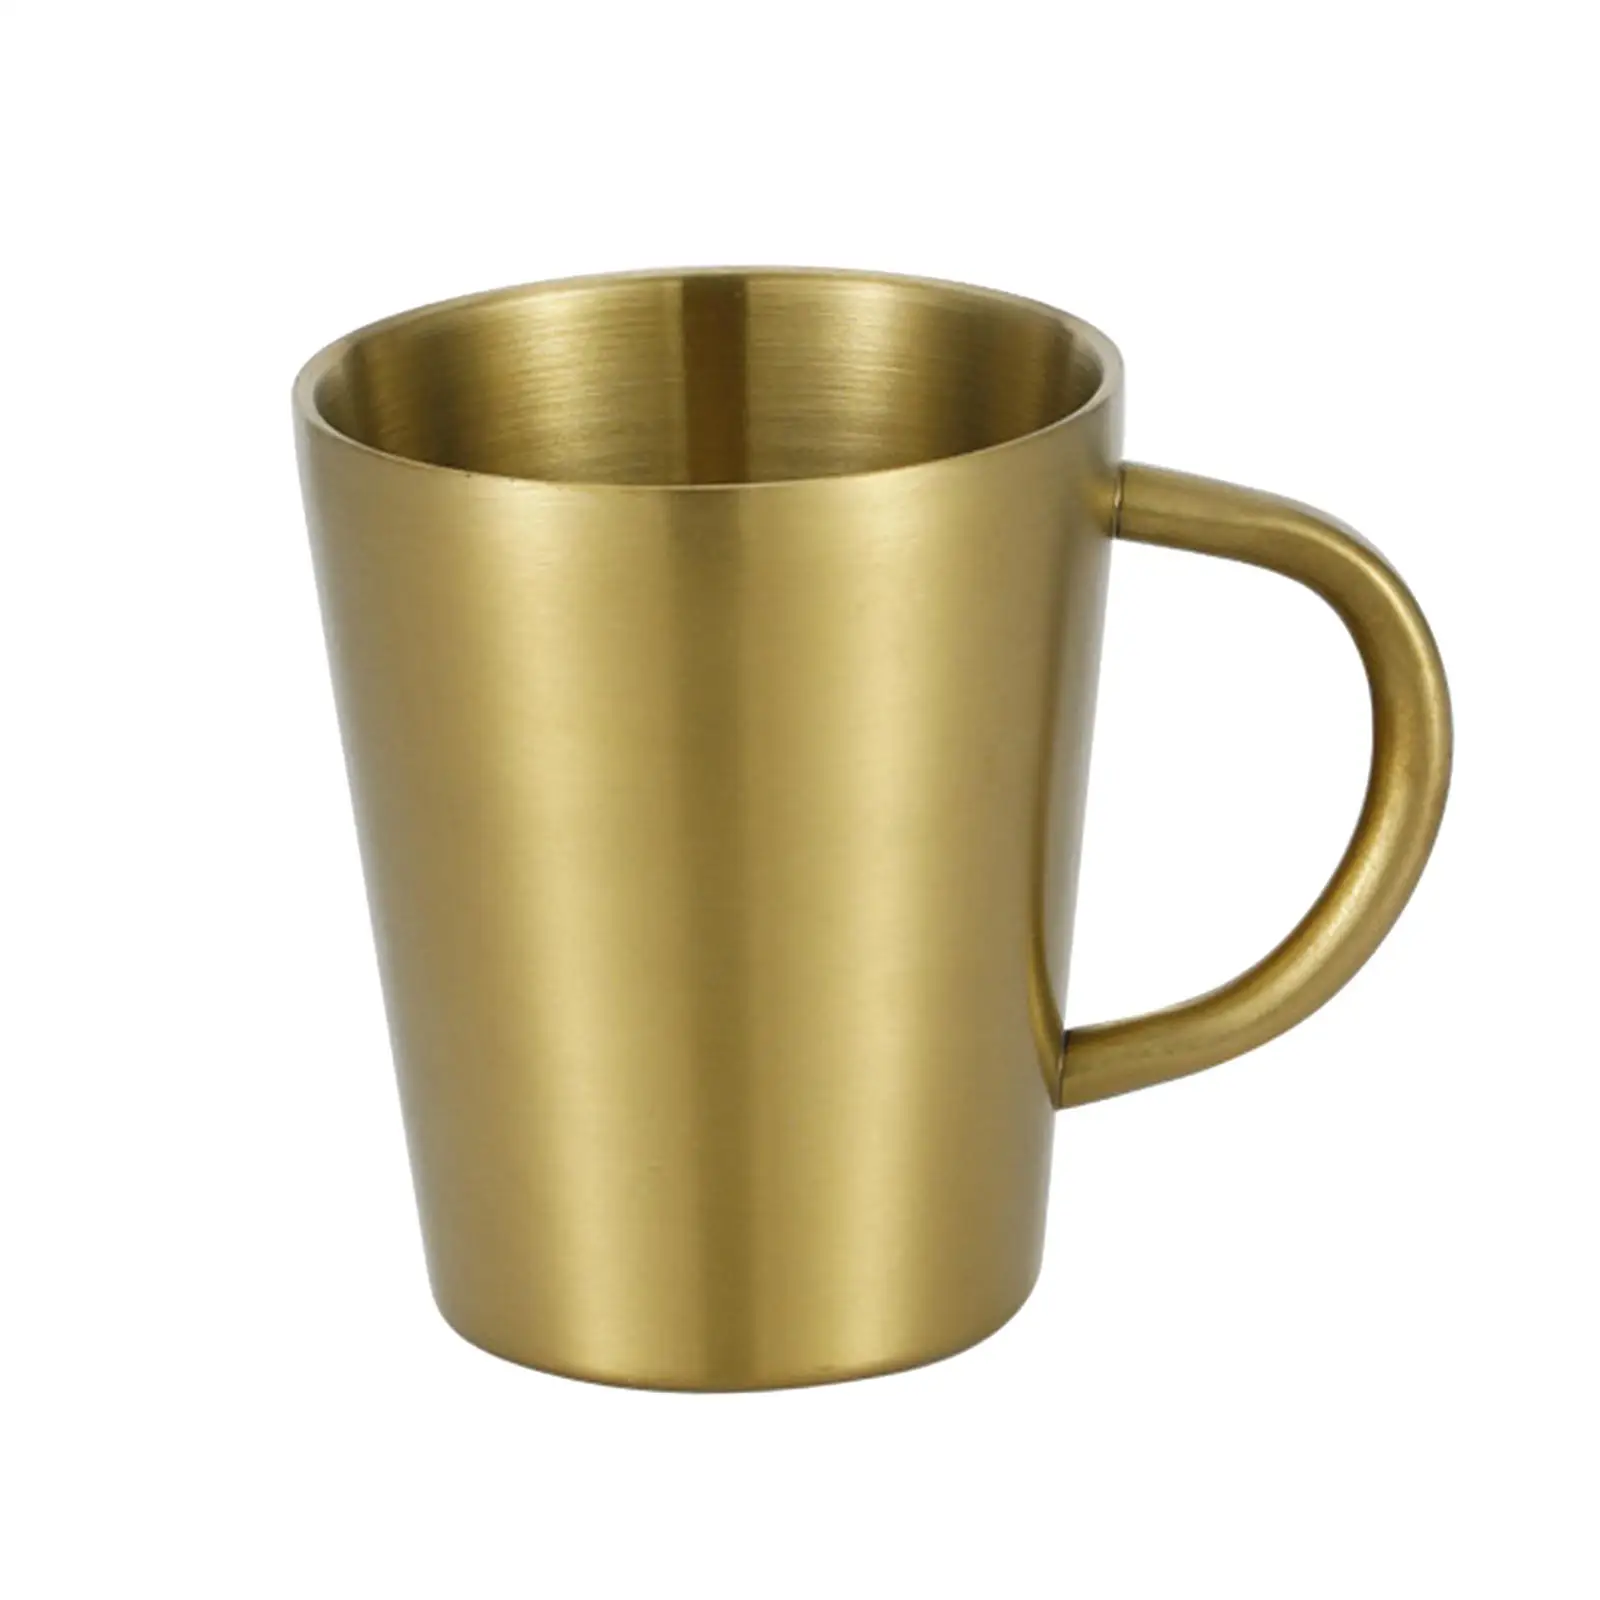 Beer Mug Hike Cup Picnic Utensils 300ml Camping Sports Travel Drinkware Cup Travel Mug Iced Tea Juice